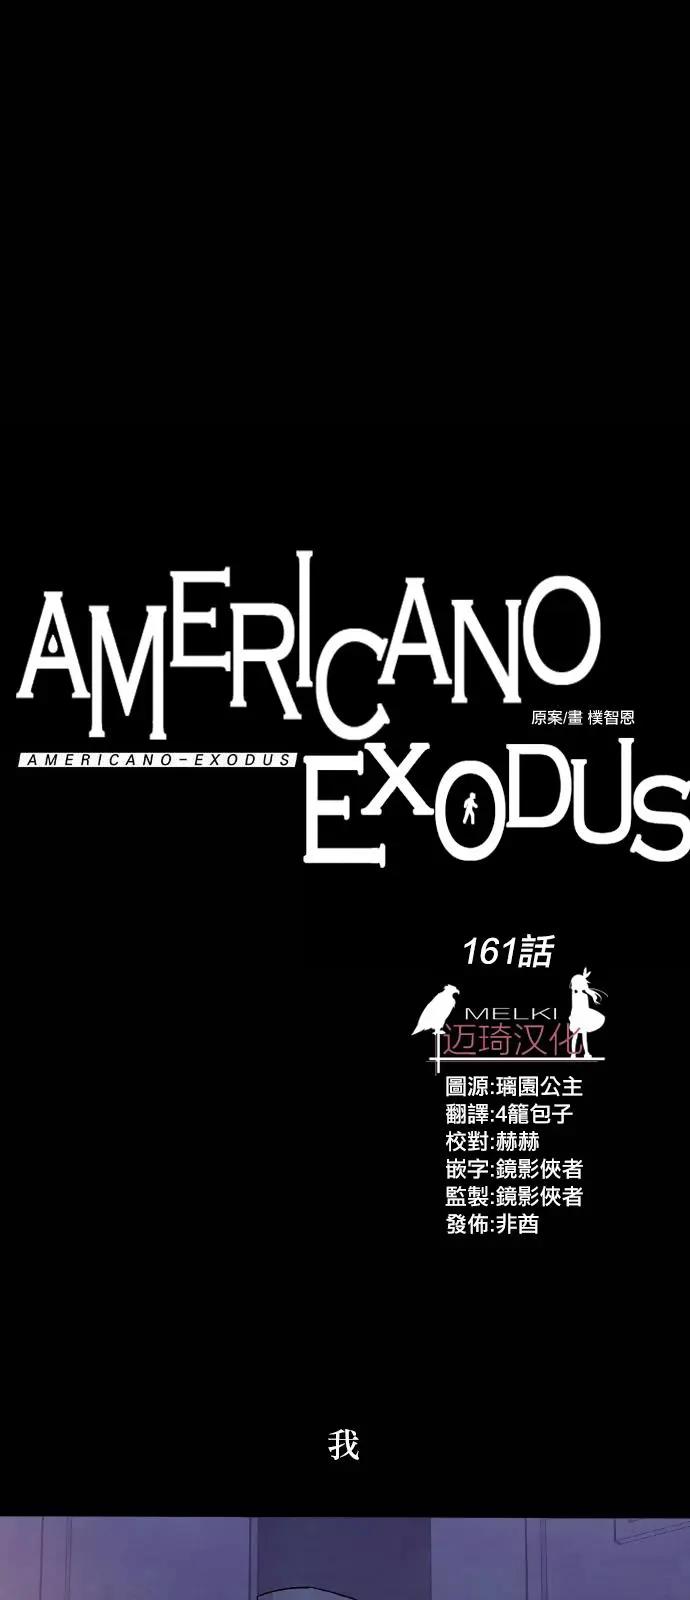 Americano-exodus - 第161回 - 1